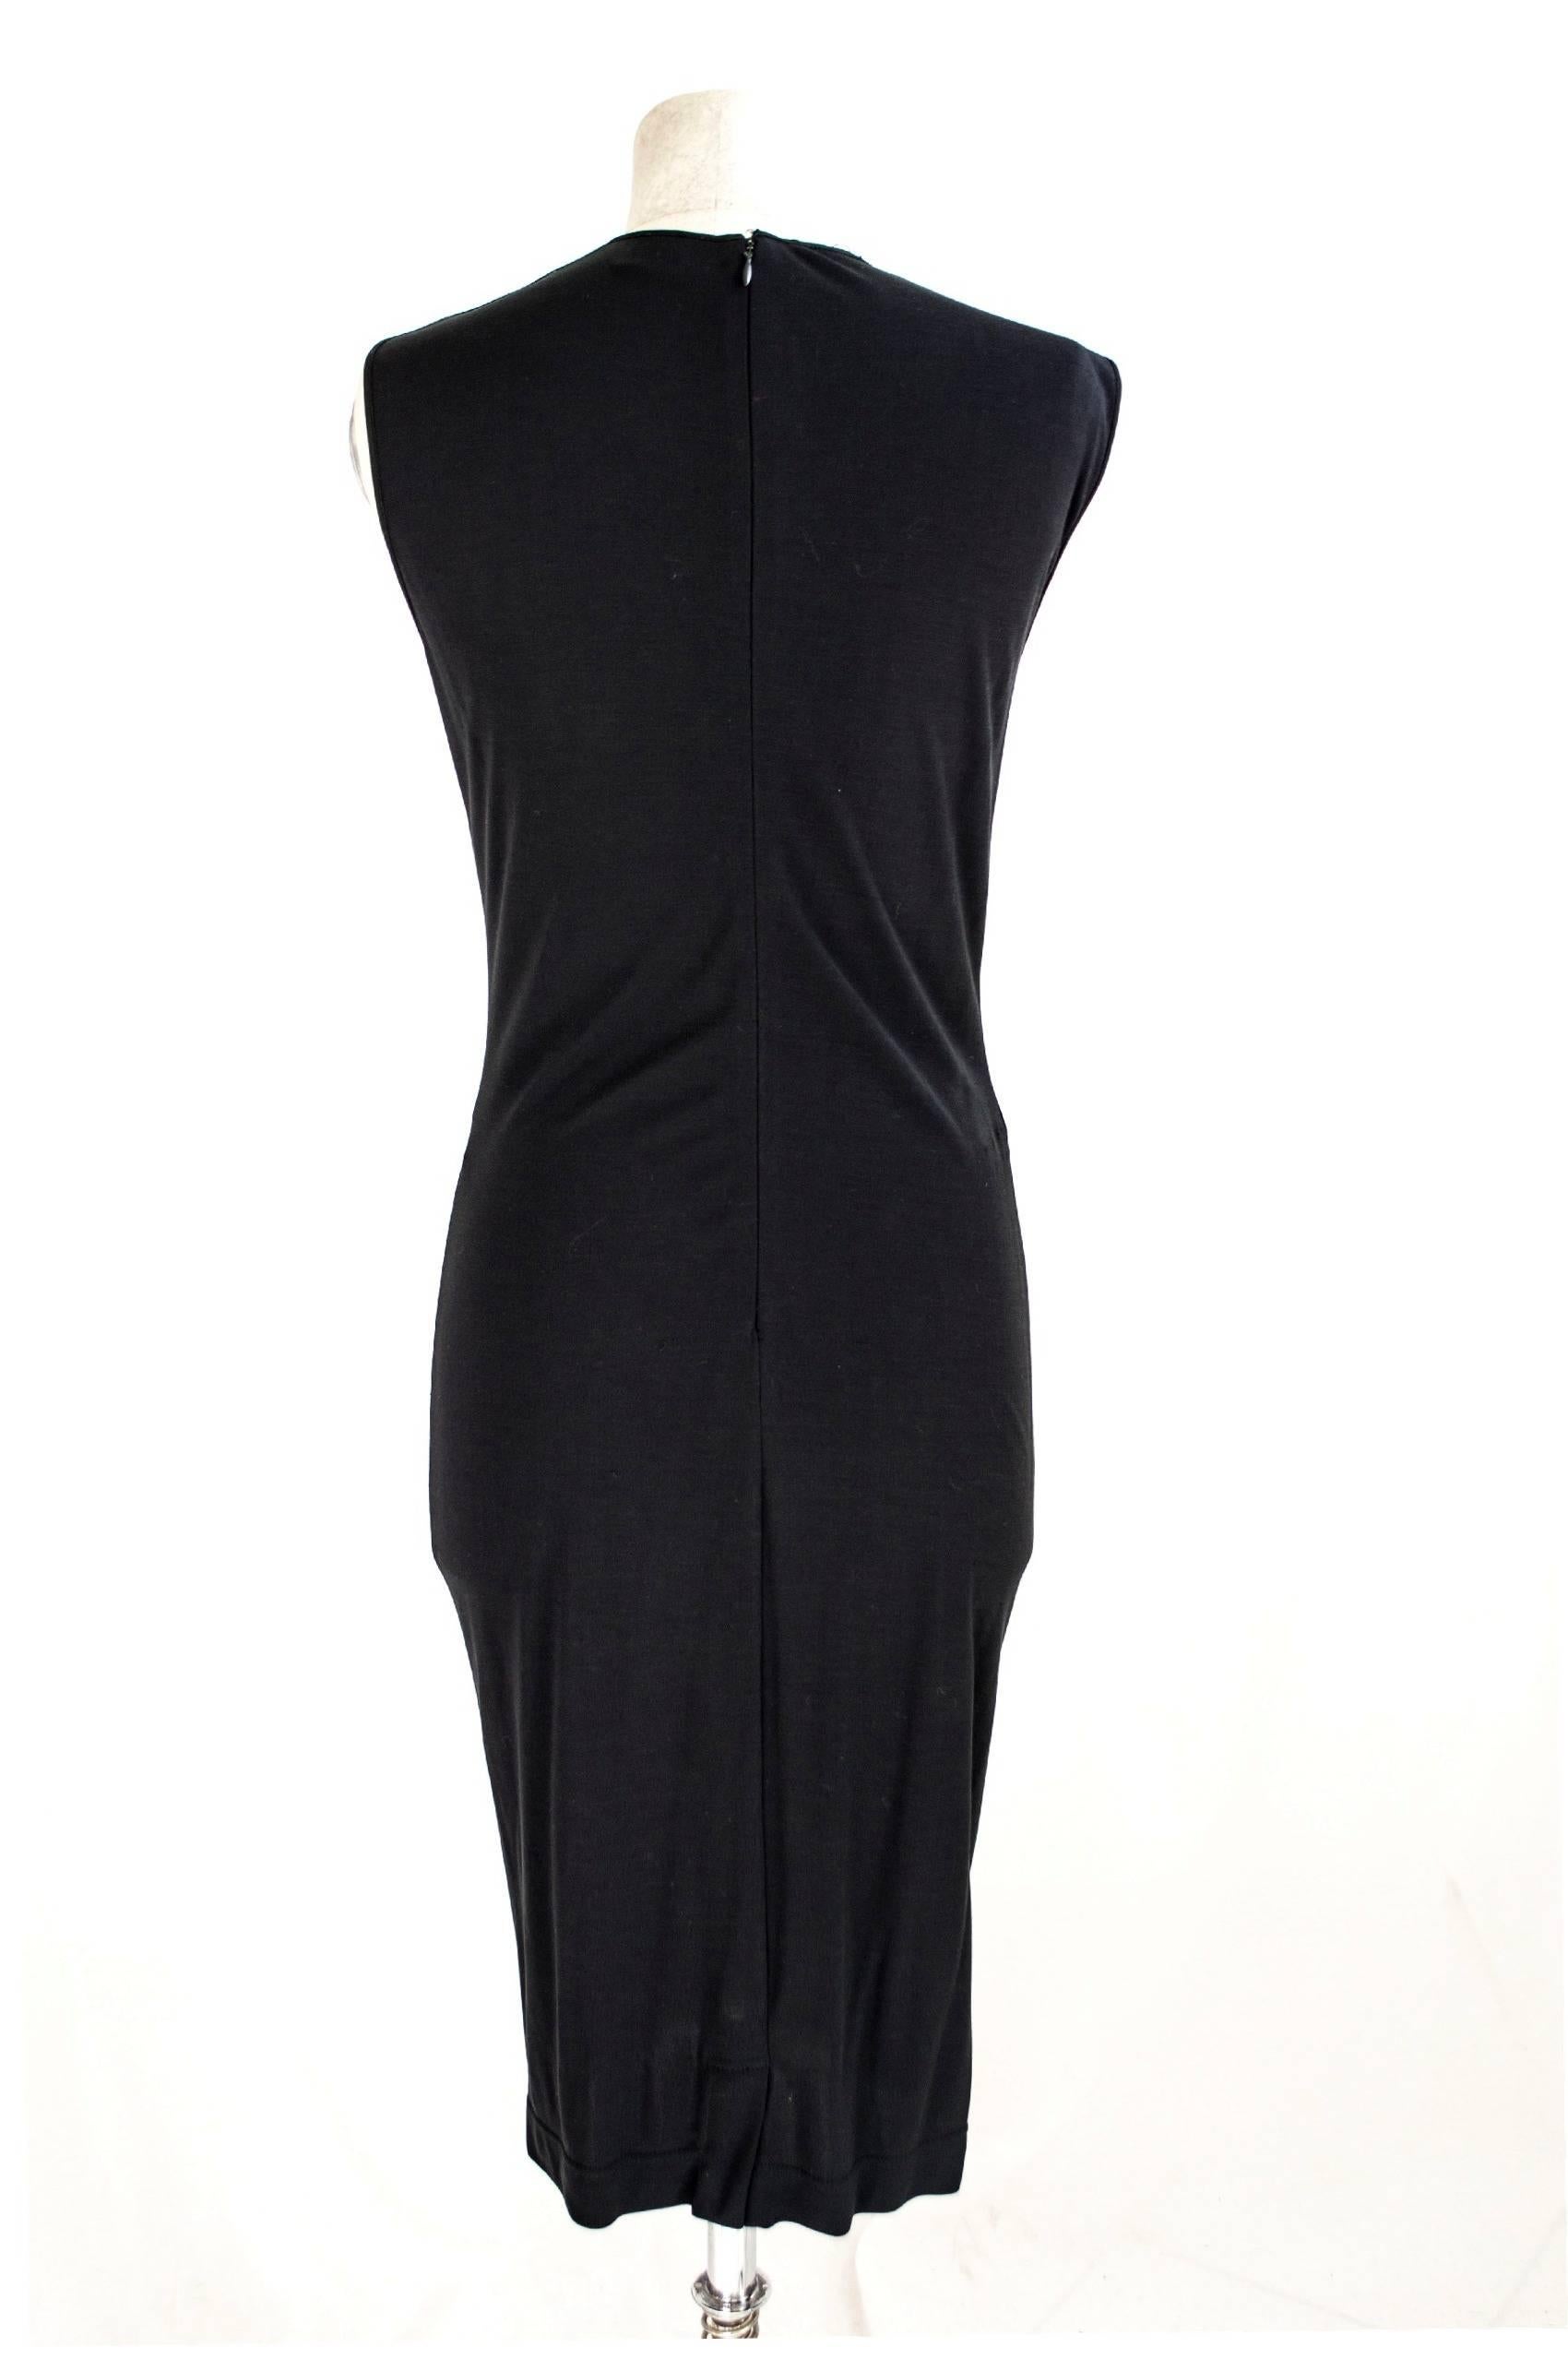 Beautiful black sheath dress Gianfranco Ferrè vintage 1980s at armholes with zipper on the back.

Measures:

Shoulders: 40 cm
Armpit to armpit: 42 cm
Total lenght: 108 cm
Sleeves: no